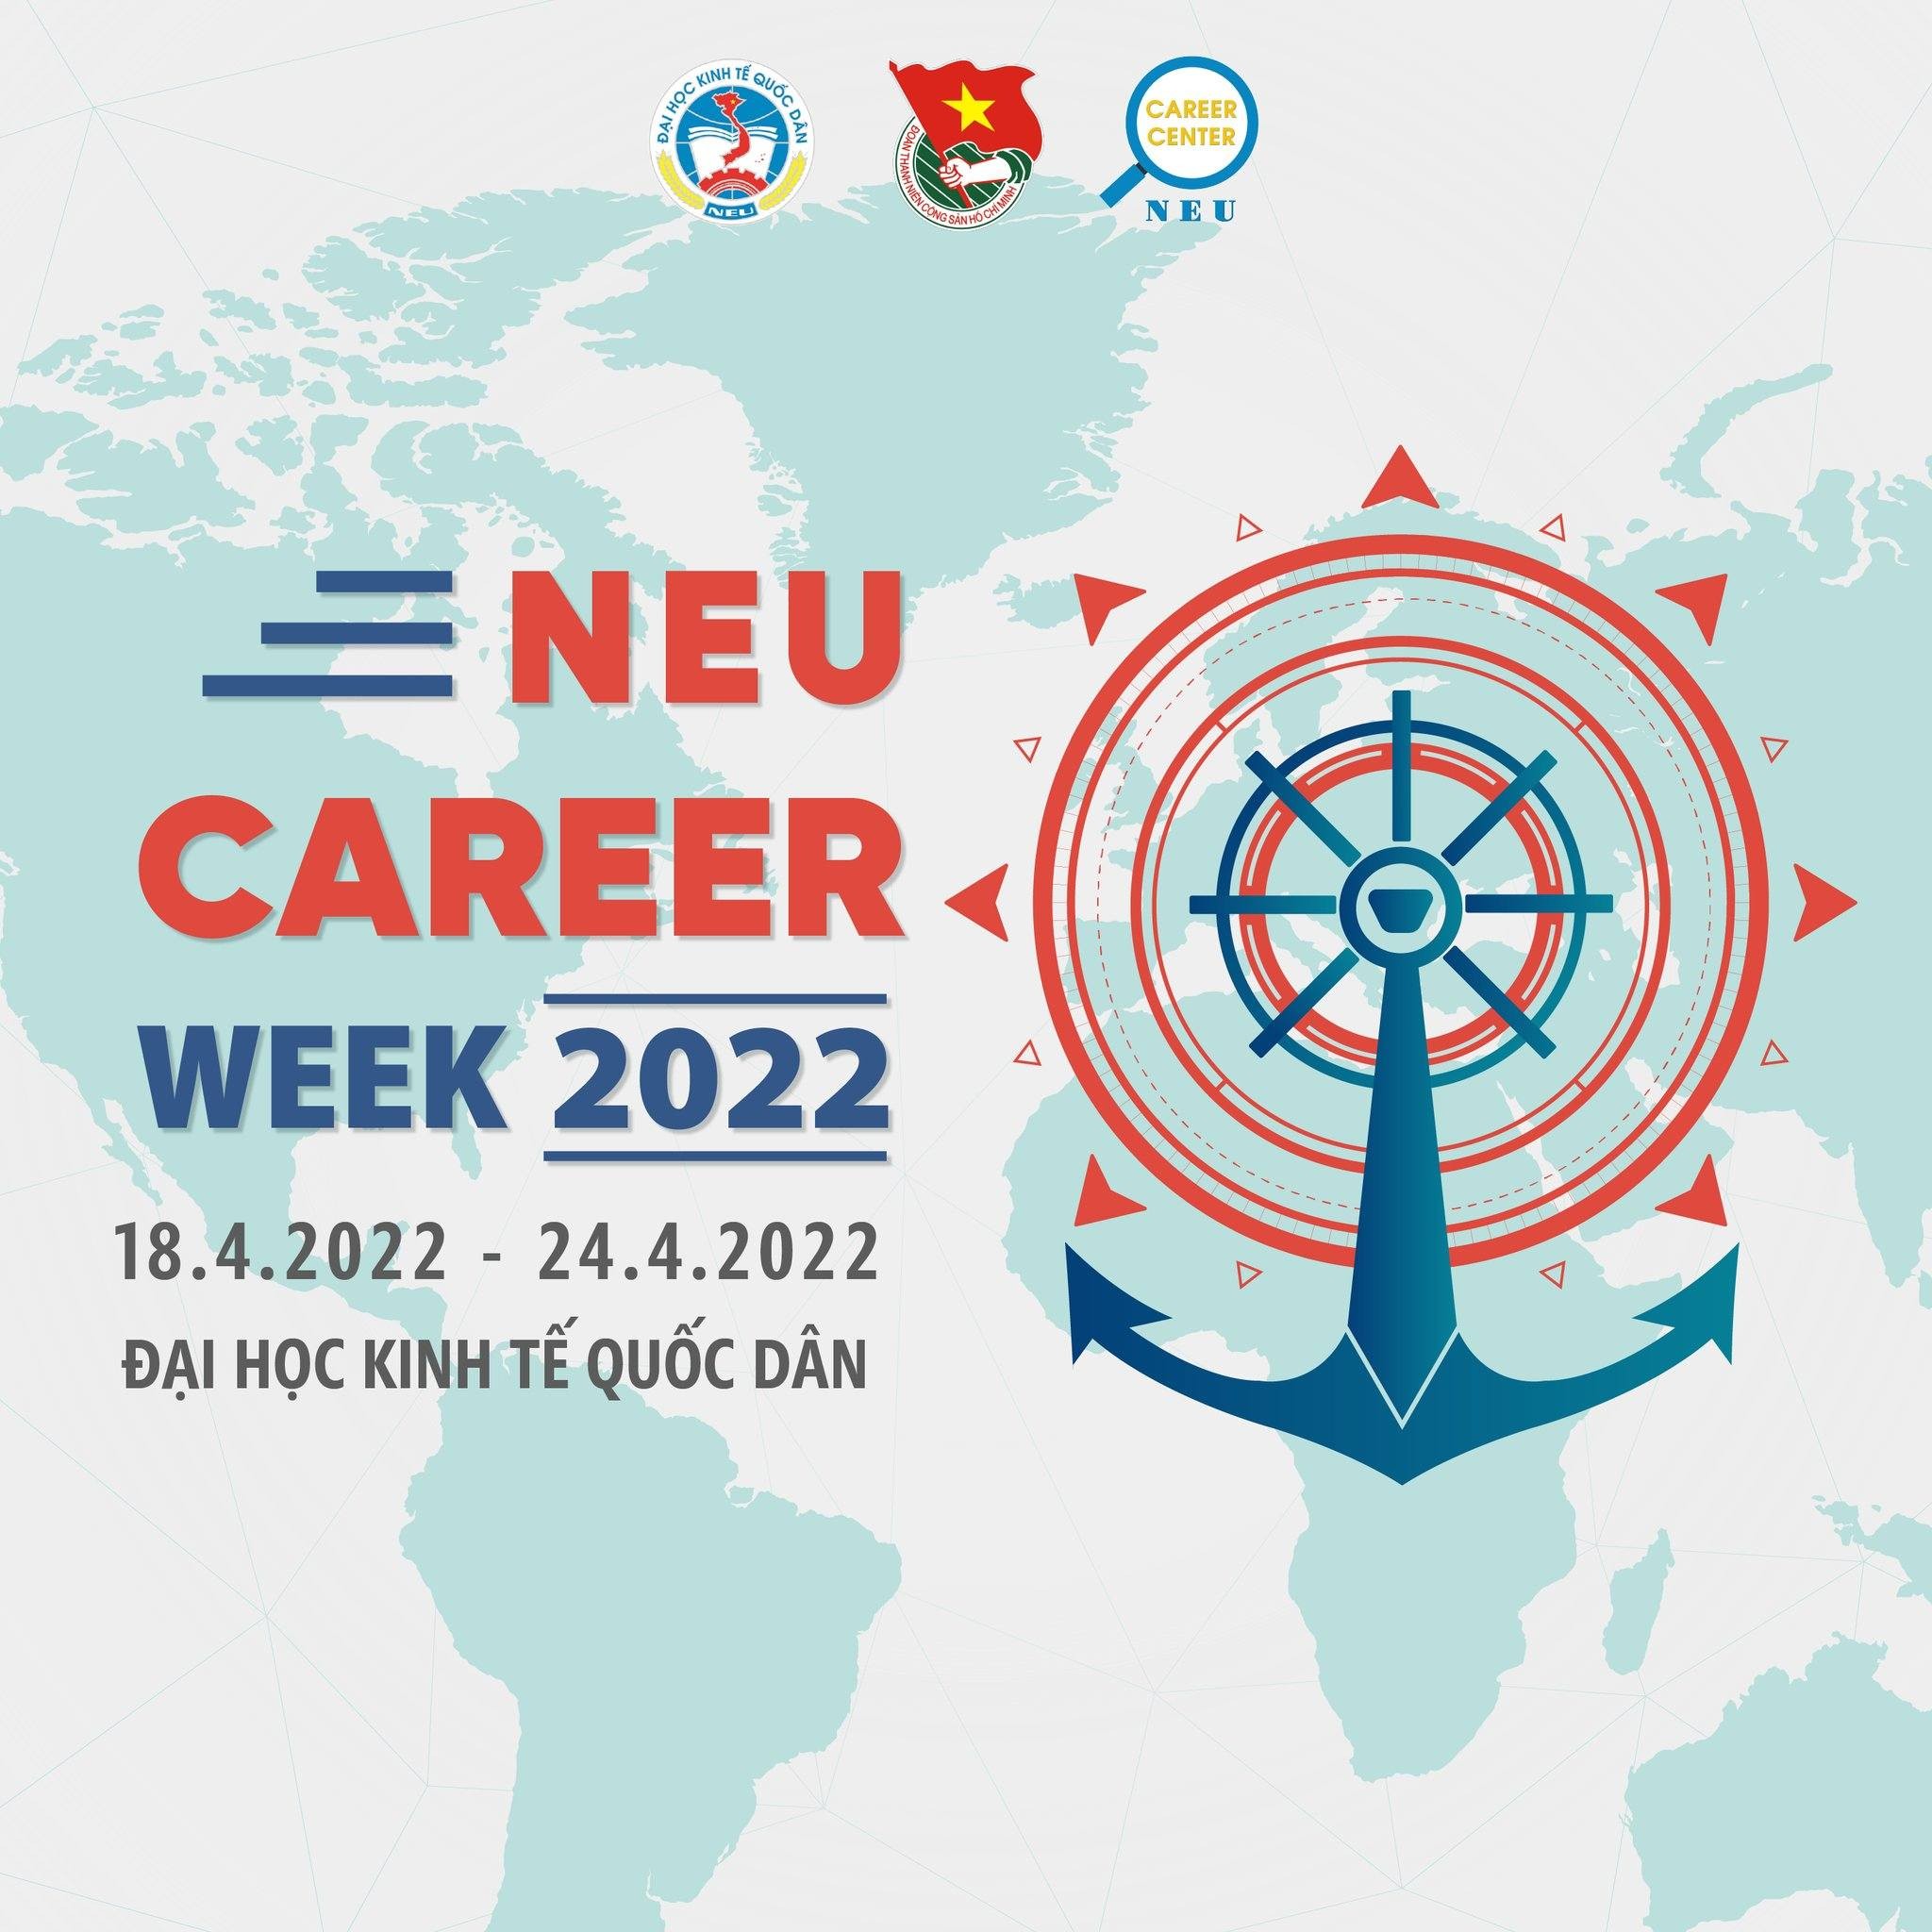 neu-career-week-2022-mo-ra-co-hoi-viec-lam-cho-hang-nghin-sinh-vien-02-1649838328.jpg